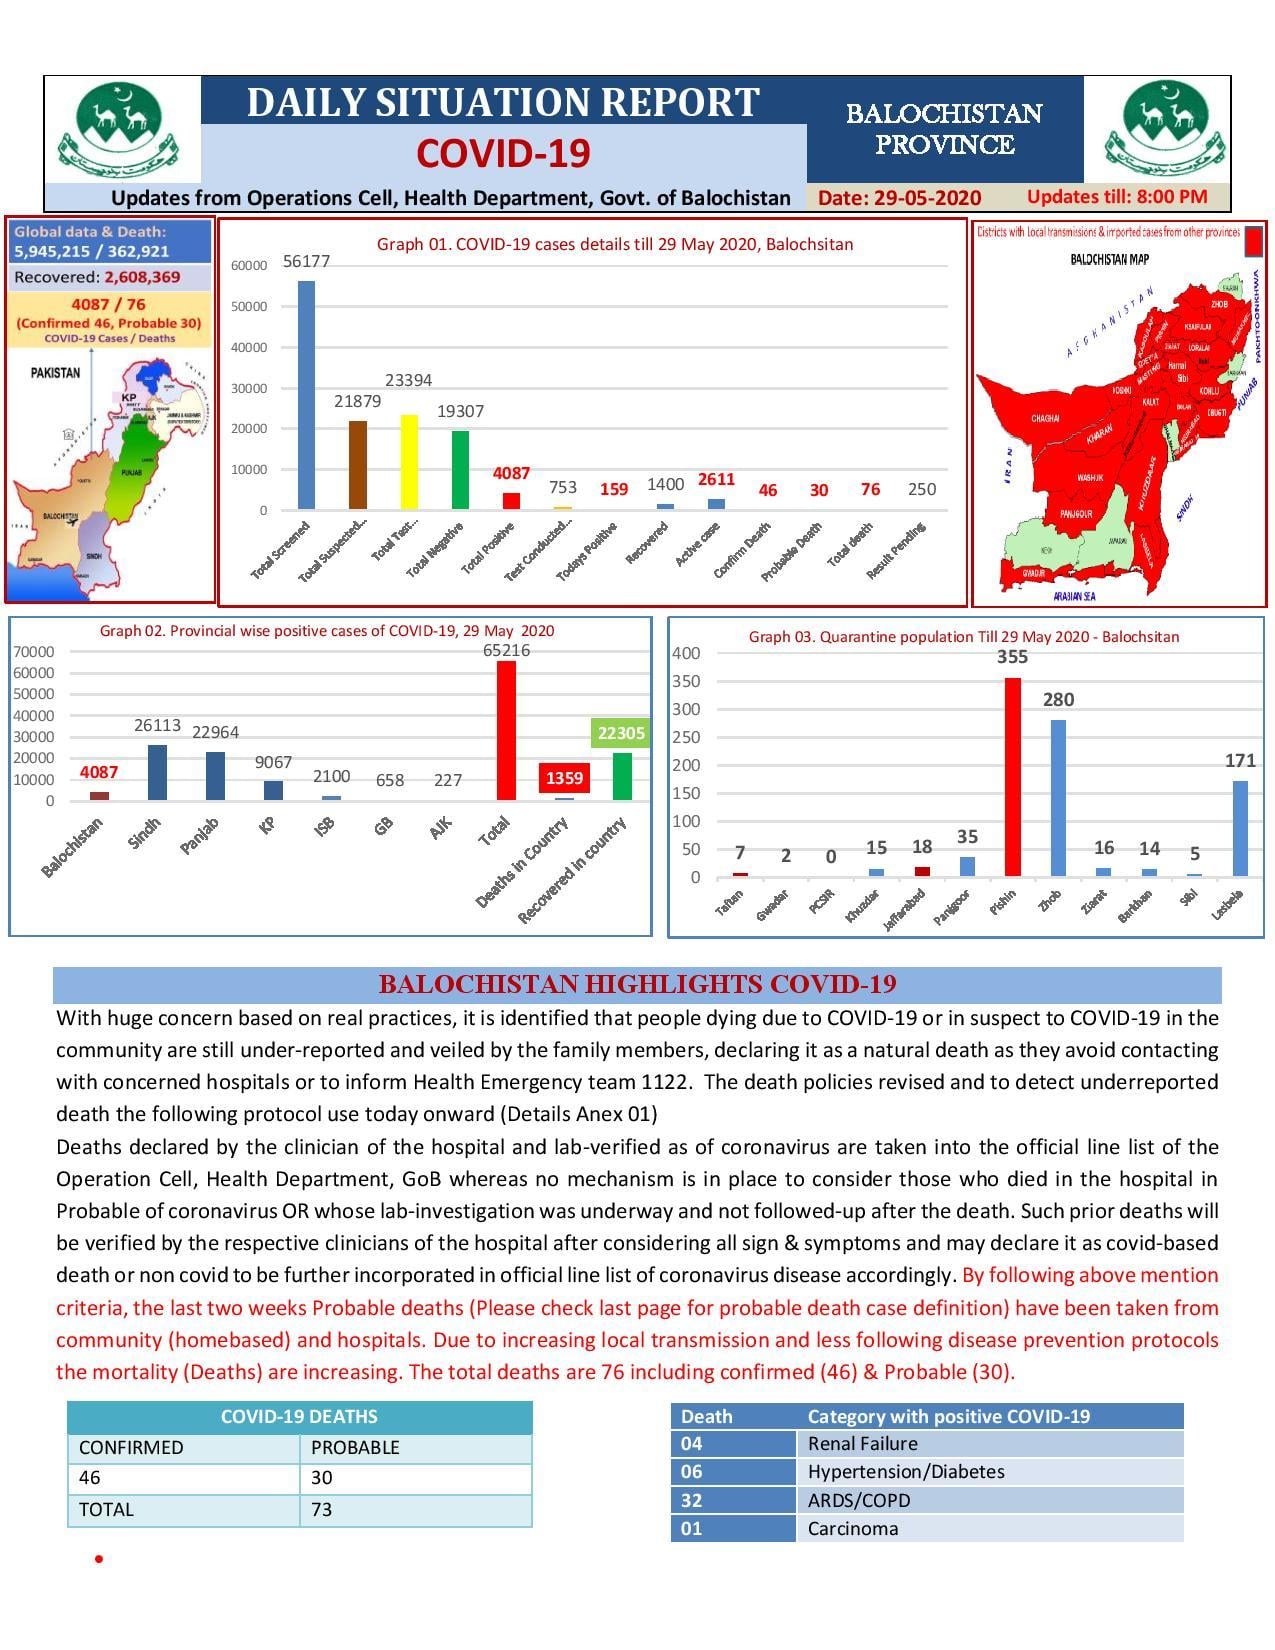 Coronavirus updates, May 29: Latest news on the COVID-19 pandemic from Pakistan and around the world